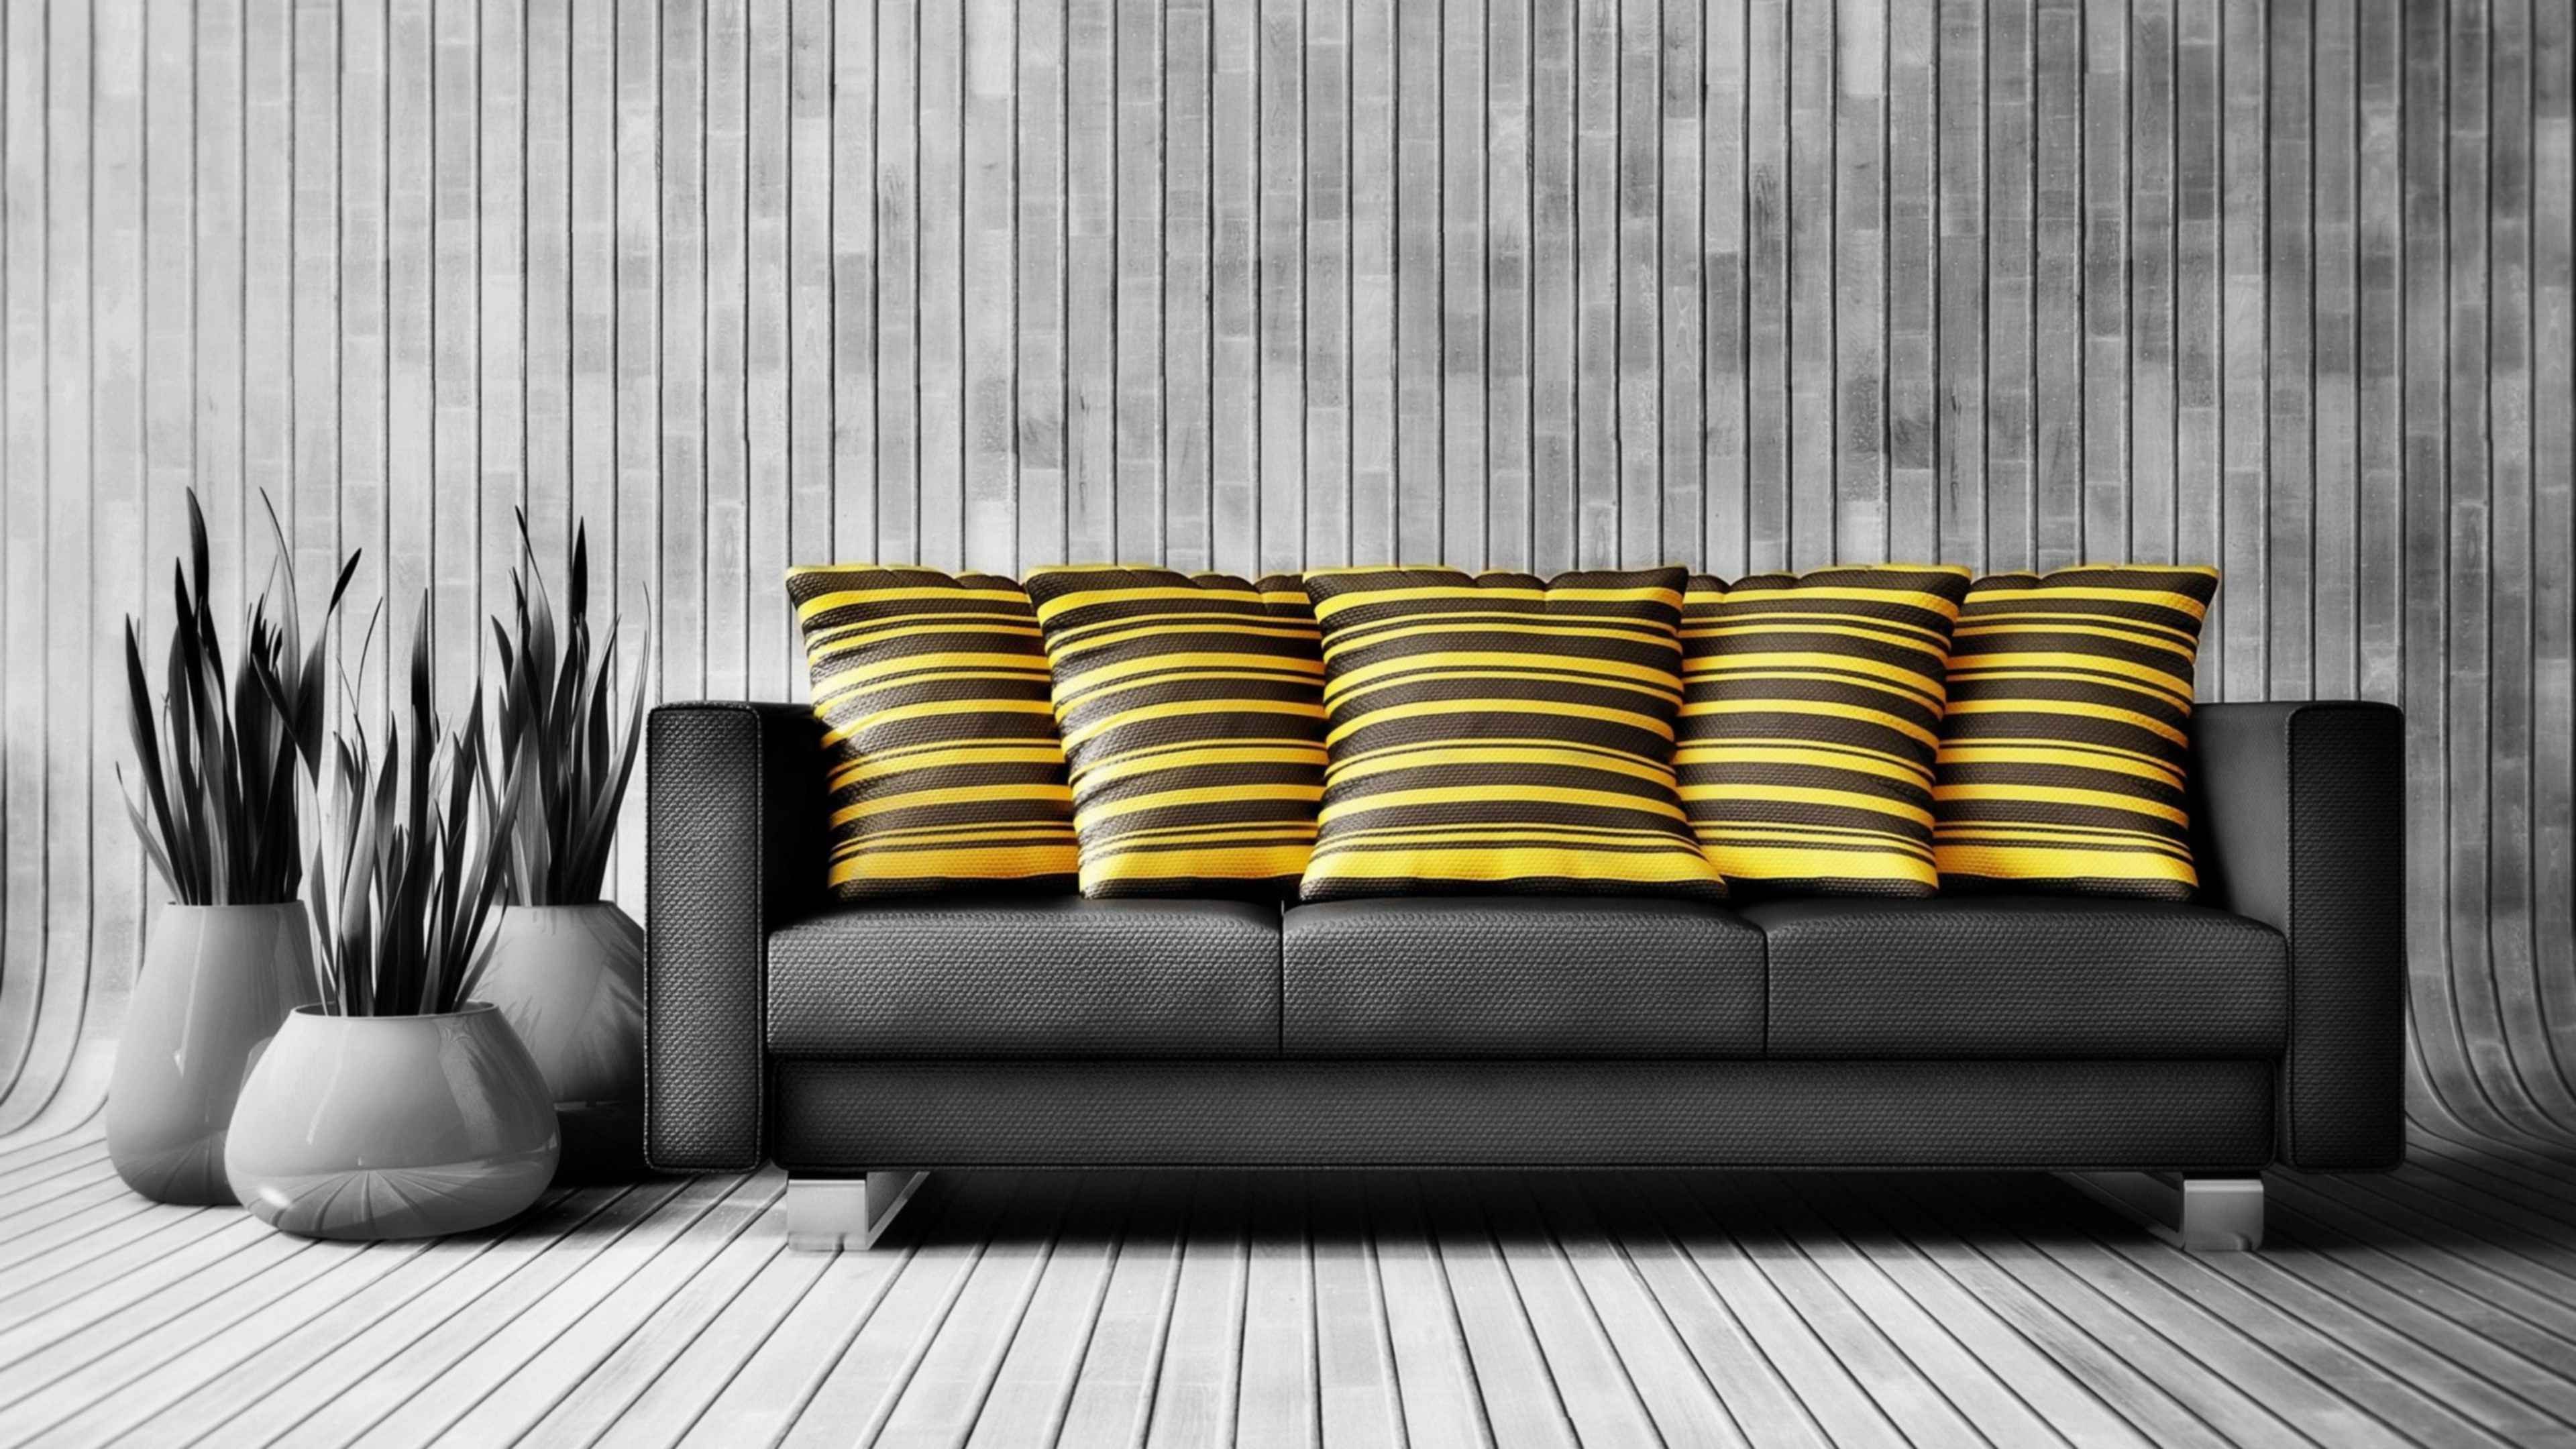 Sofa pictures. Фон интерьер. Стильные обои для стен. Желтый диван в интерьере. Стильные обои в интерьере.